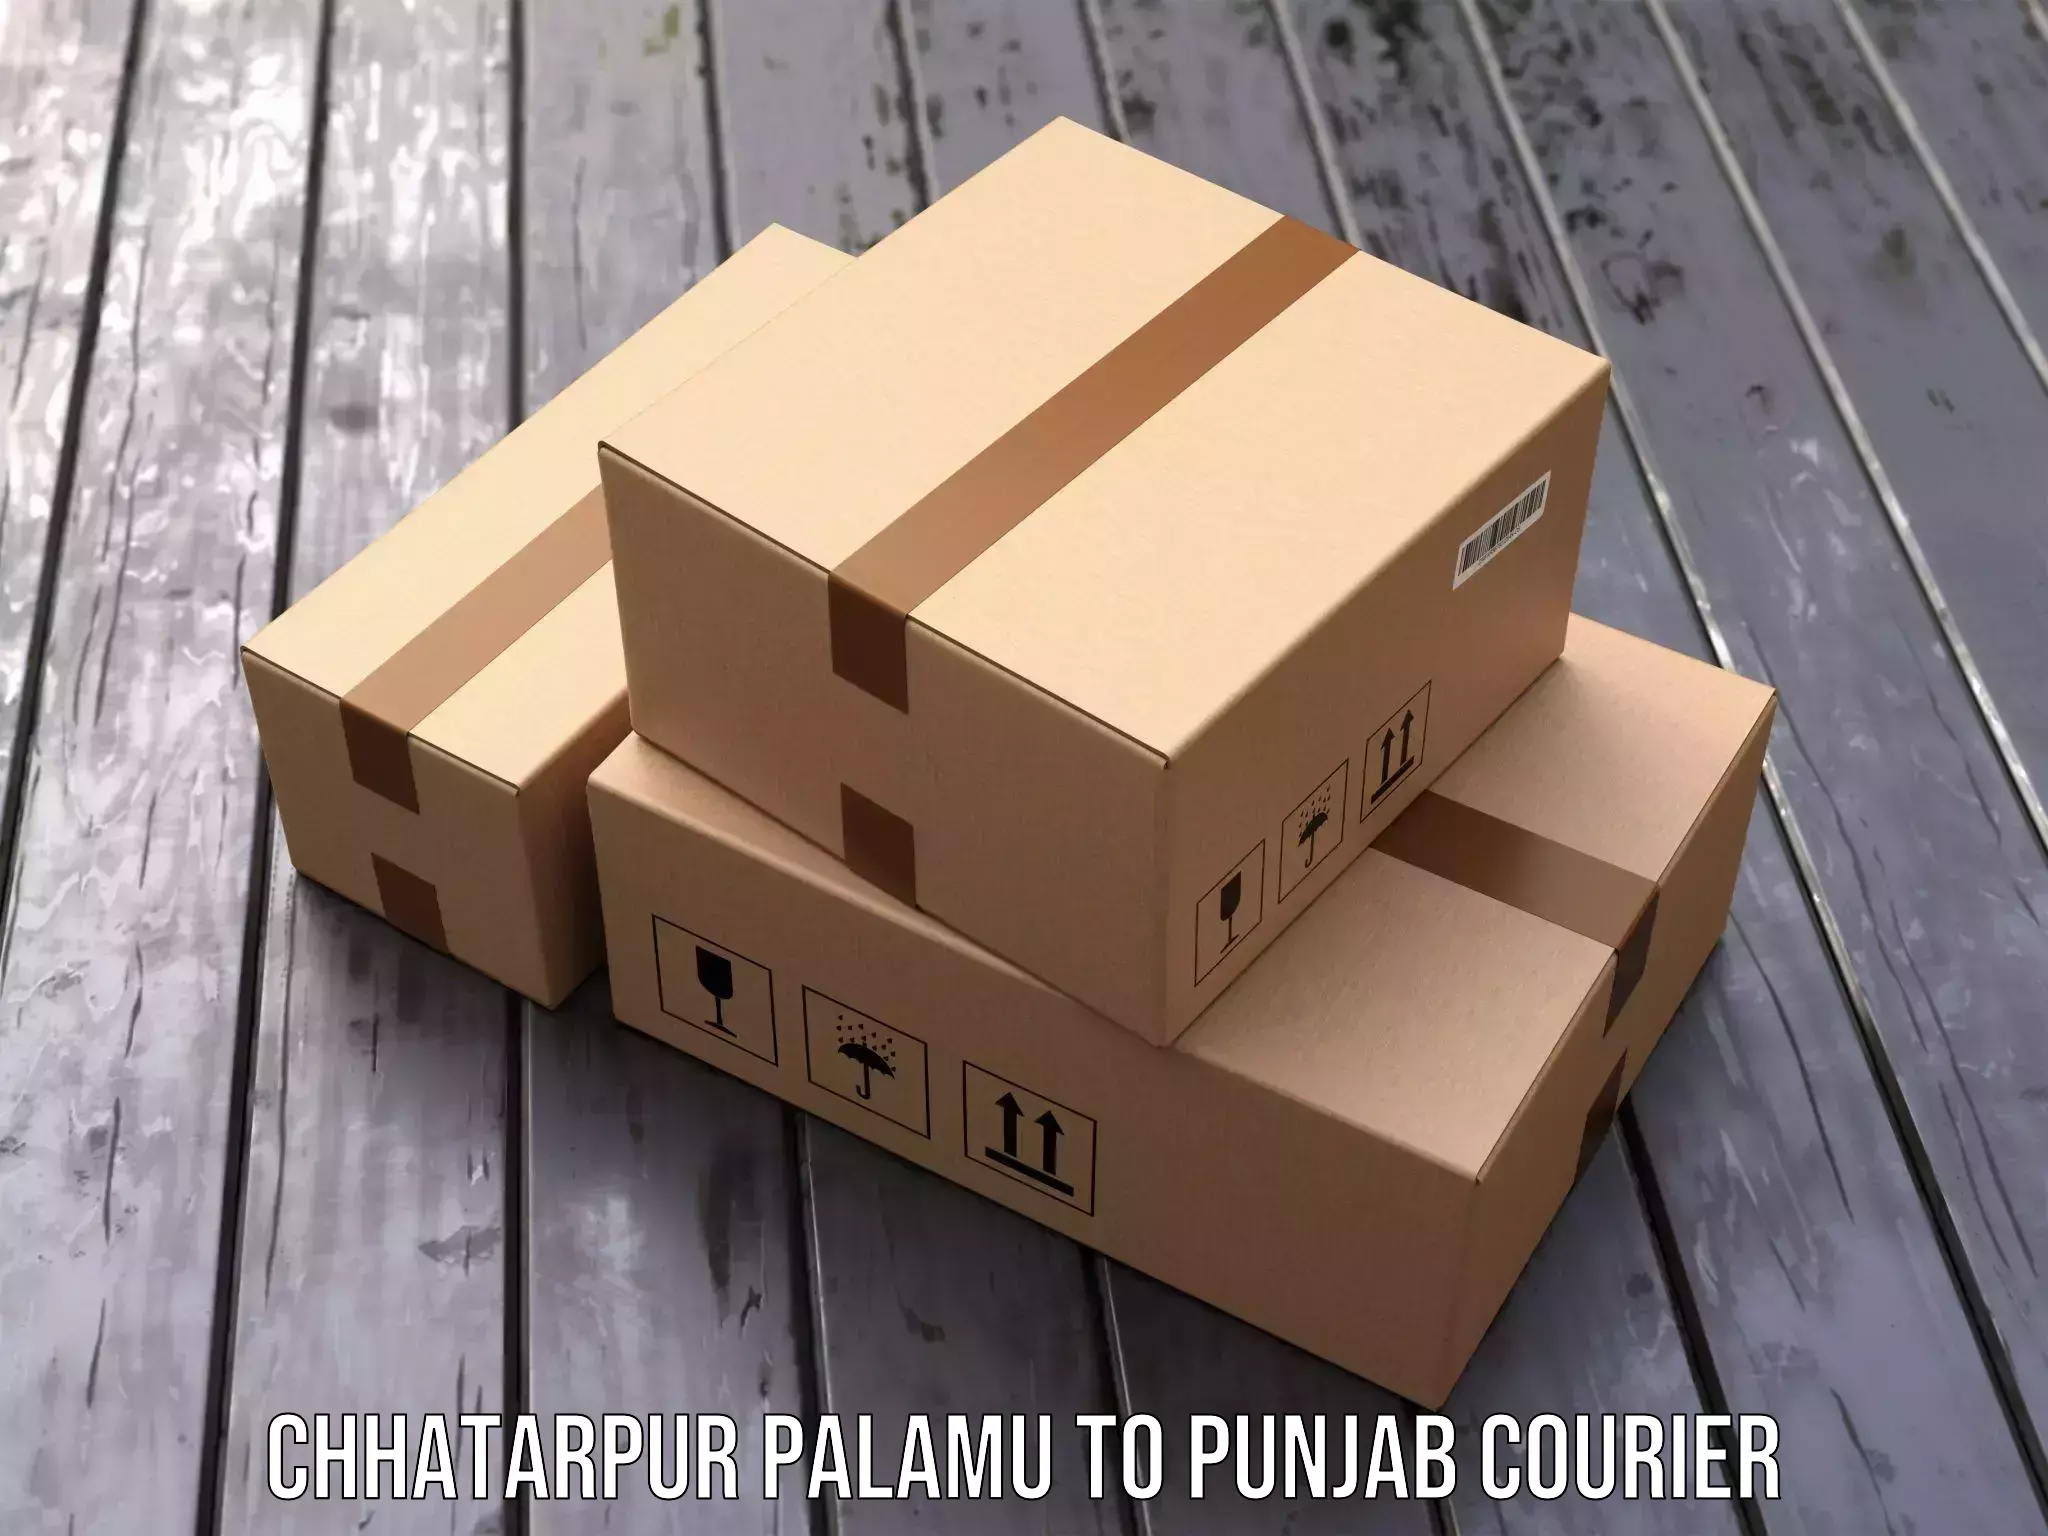 Reliable parcel services Chhatarpur Palamu to Garhshankar